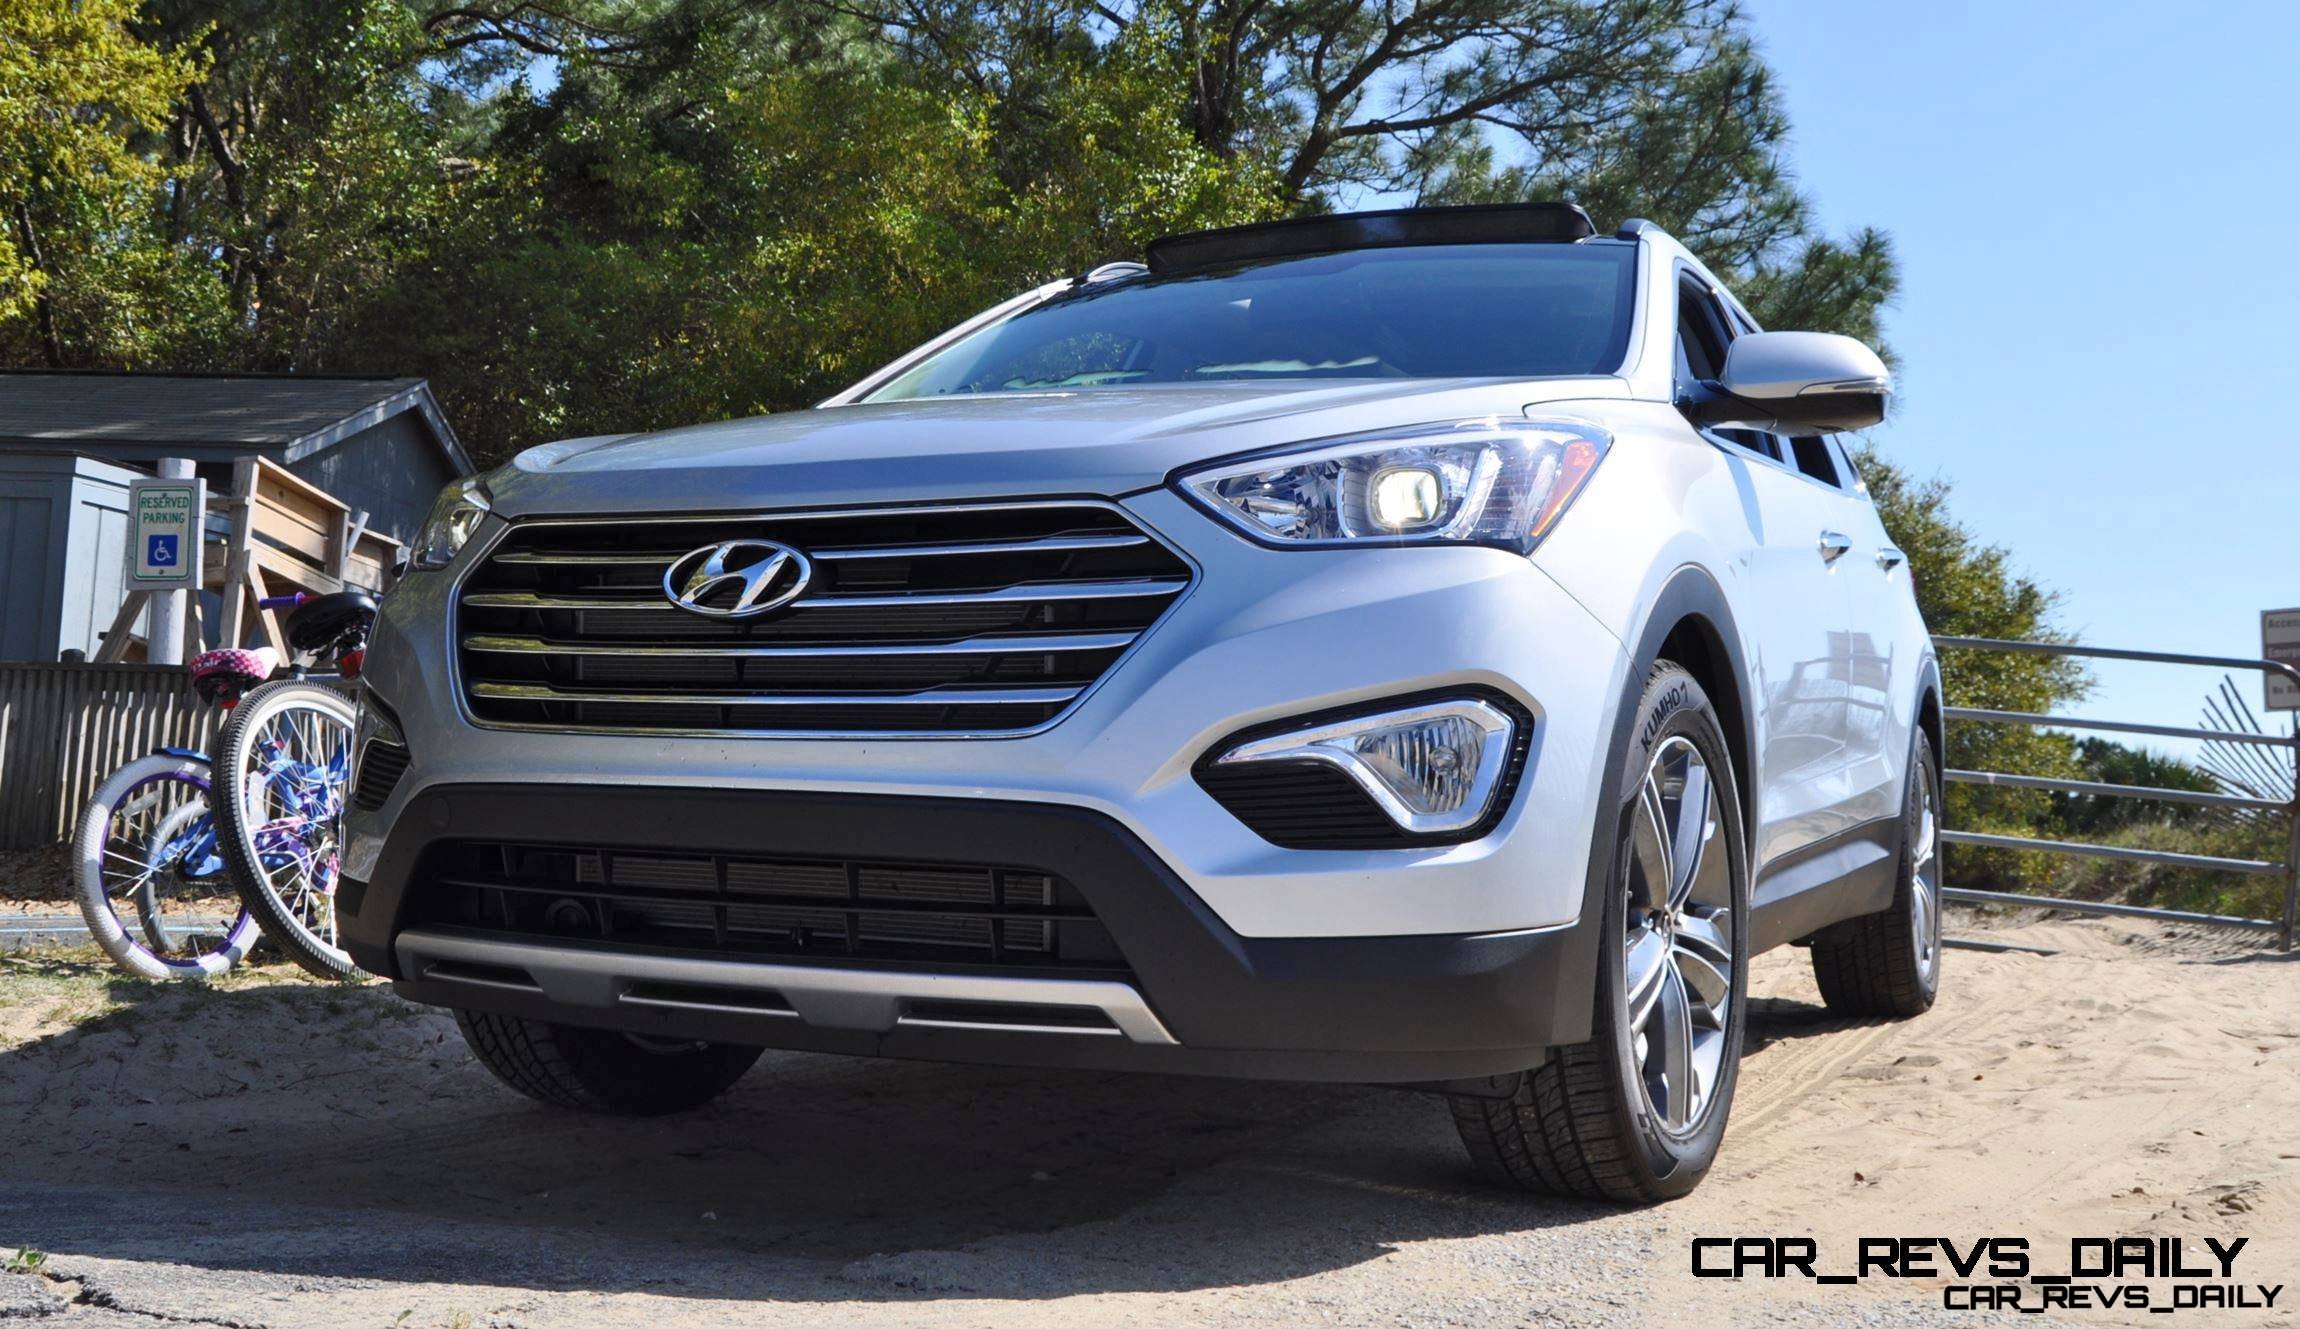 2015 Hyundai Santa Fe Review